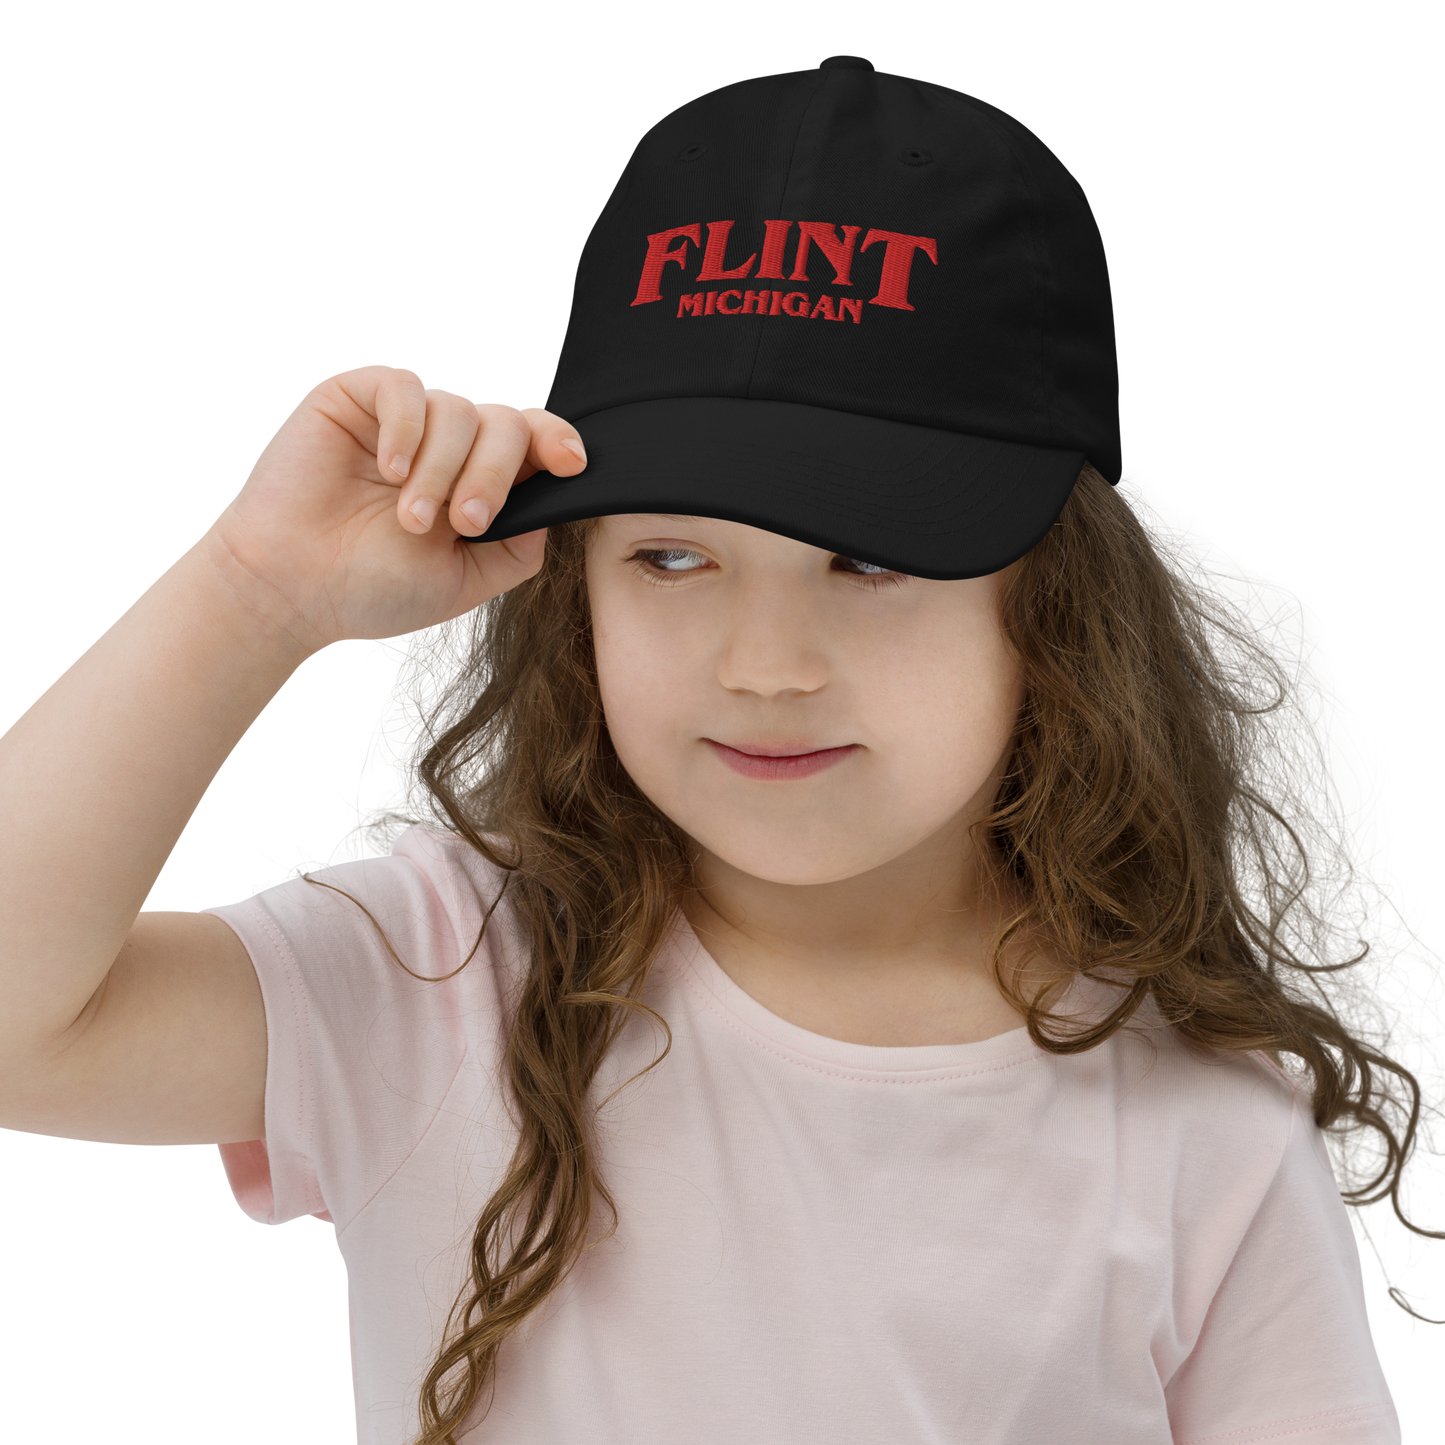 'Flint Michigan' Youth Baseball Cap (1980s Drama Parody)